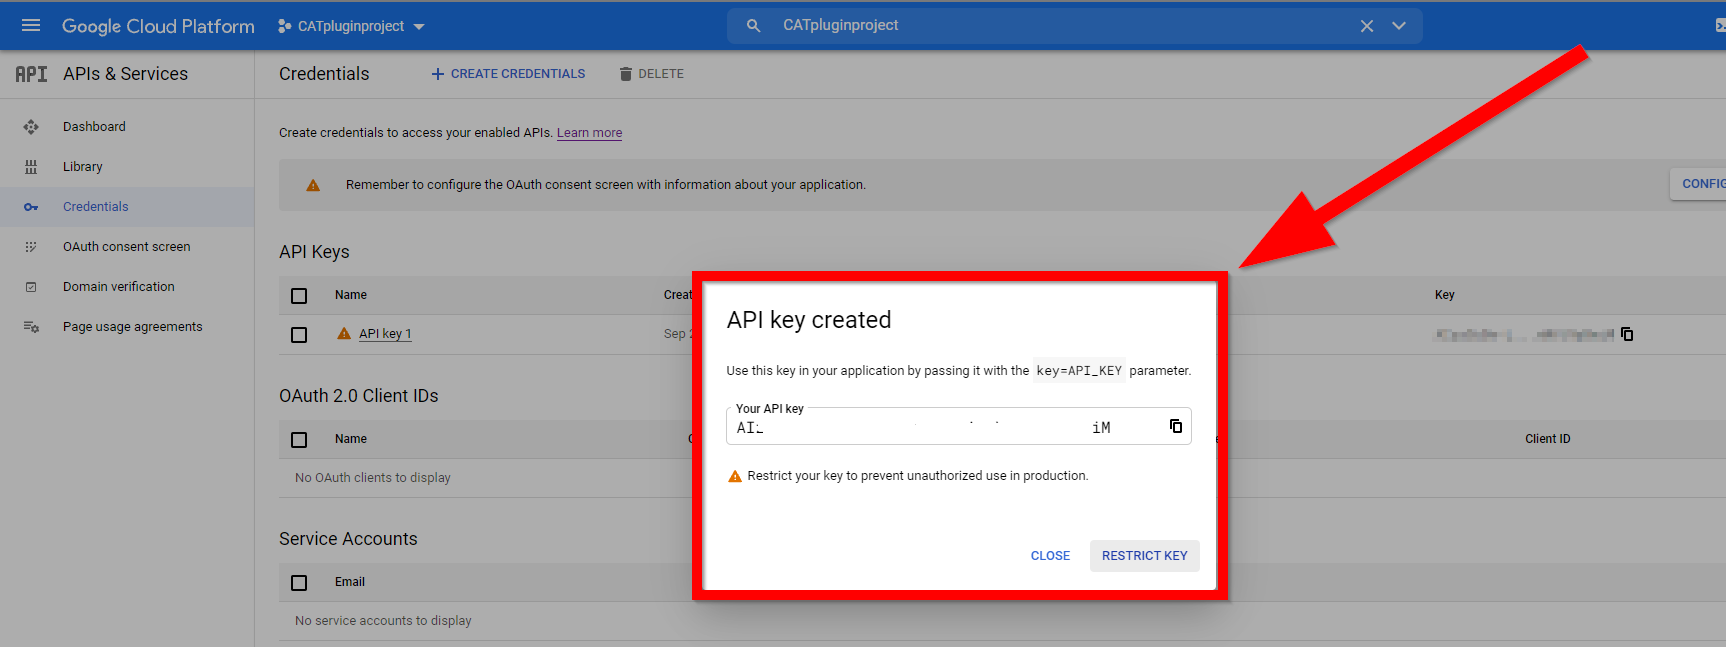 How to obtain an API key_Google_pic16